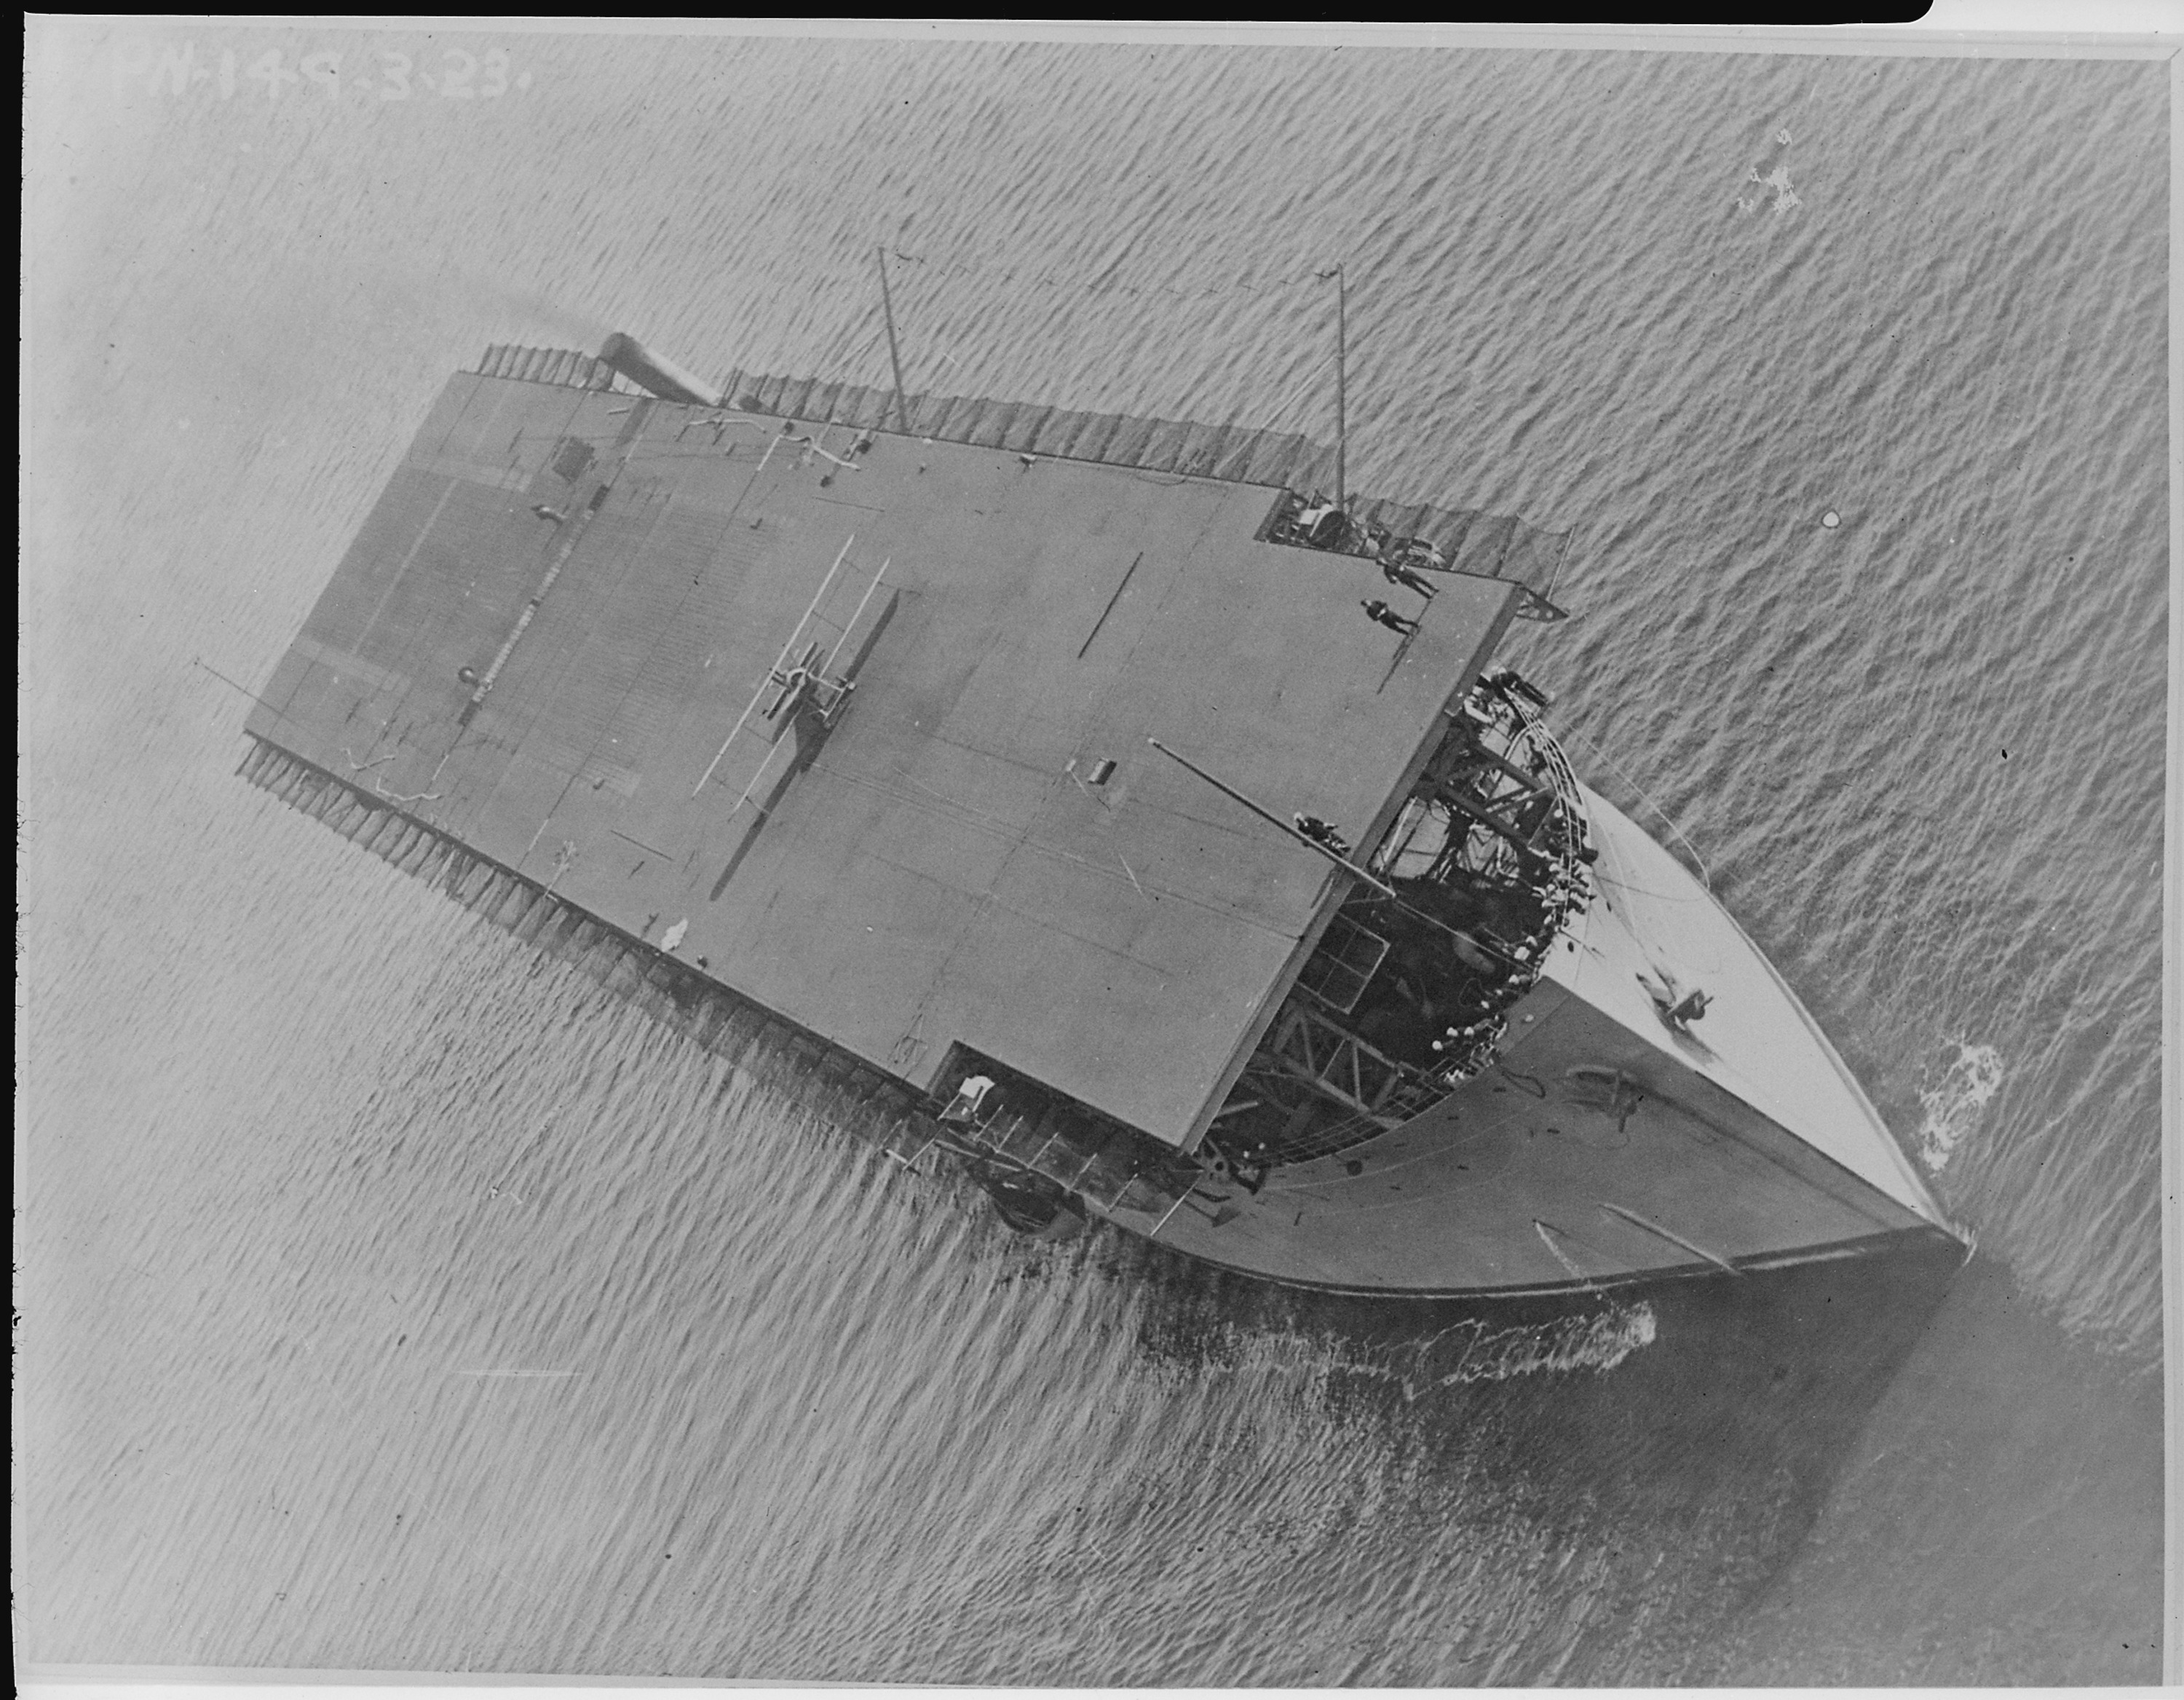 USS Langley (CV-1) in 1926. US Navy Photo